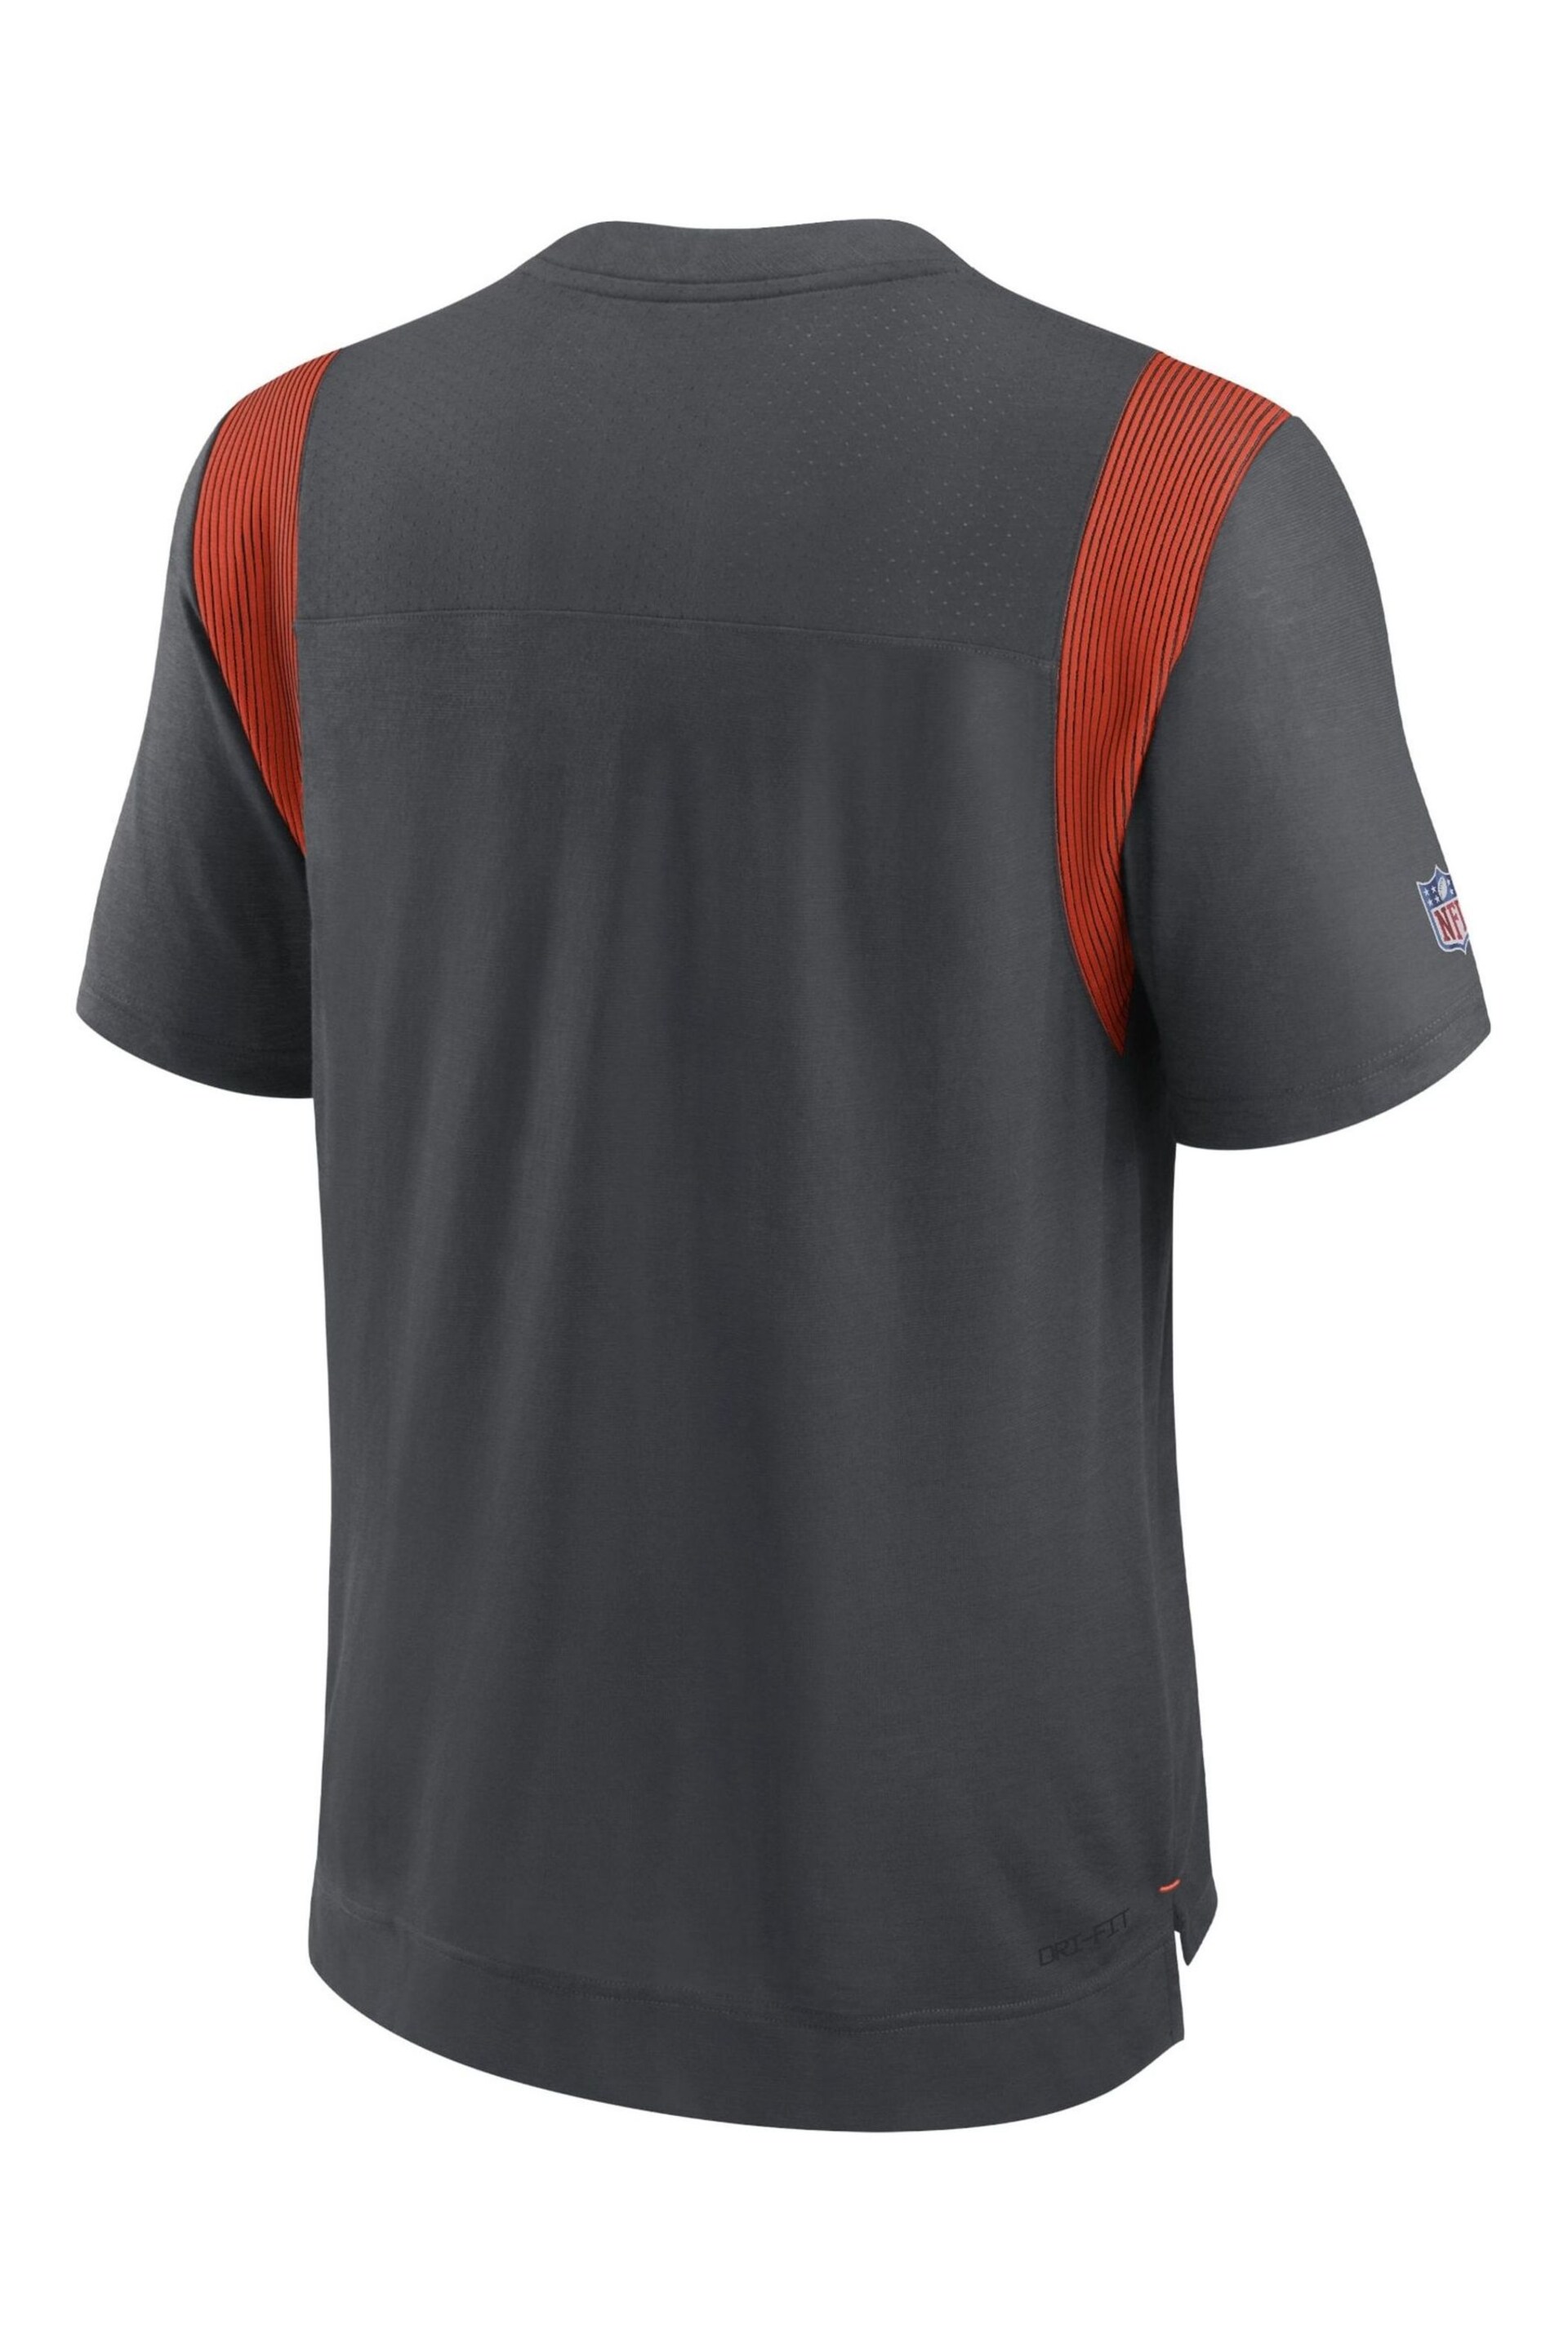 Nike Black NFL Fanatics Cleveland Sideline Nike Dri-FIT Player Short Sleeve Top - Image 2 of 3